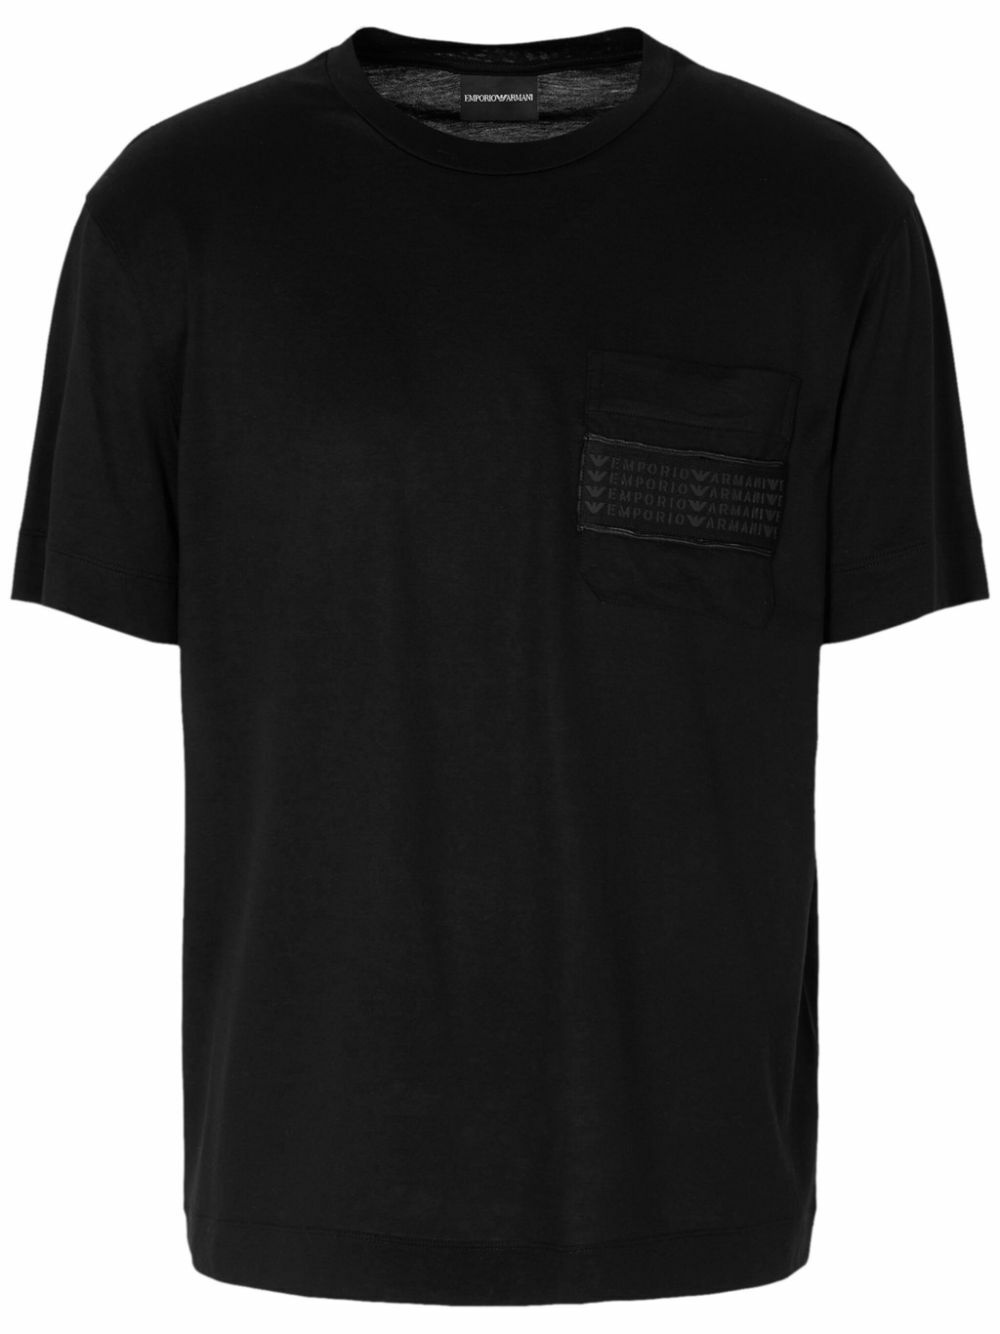 EMPORIO ARMANI - Pocket T-shirt